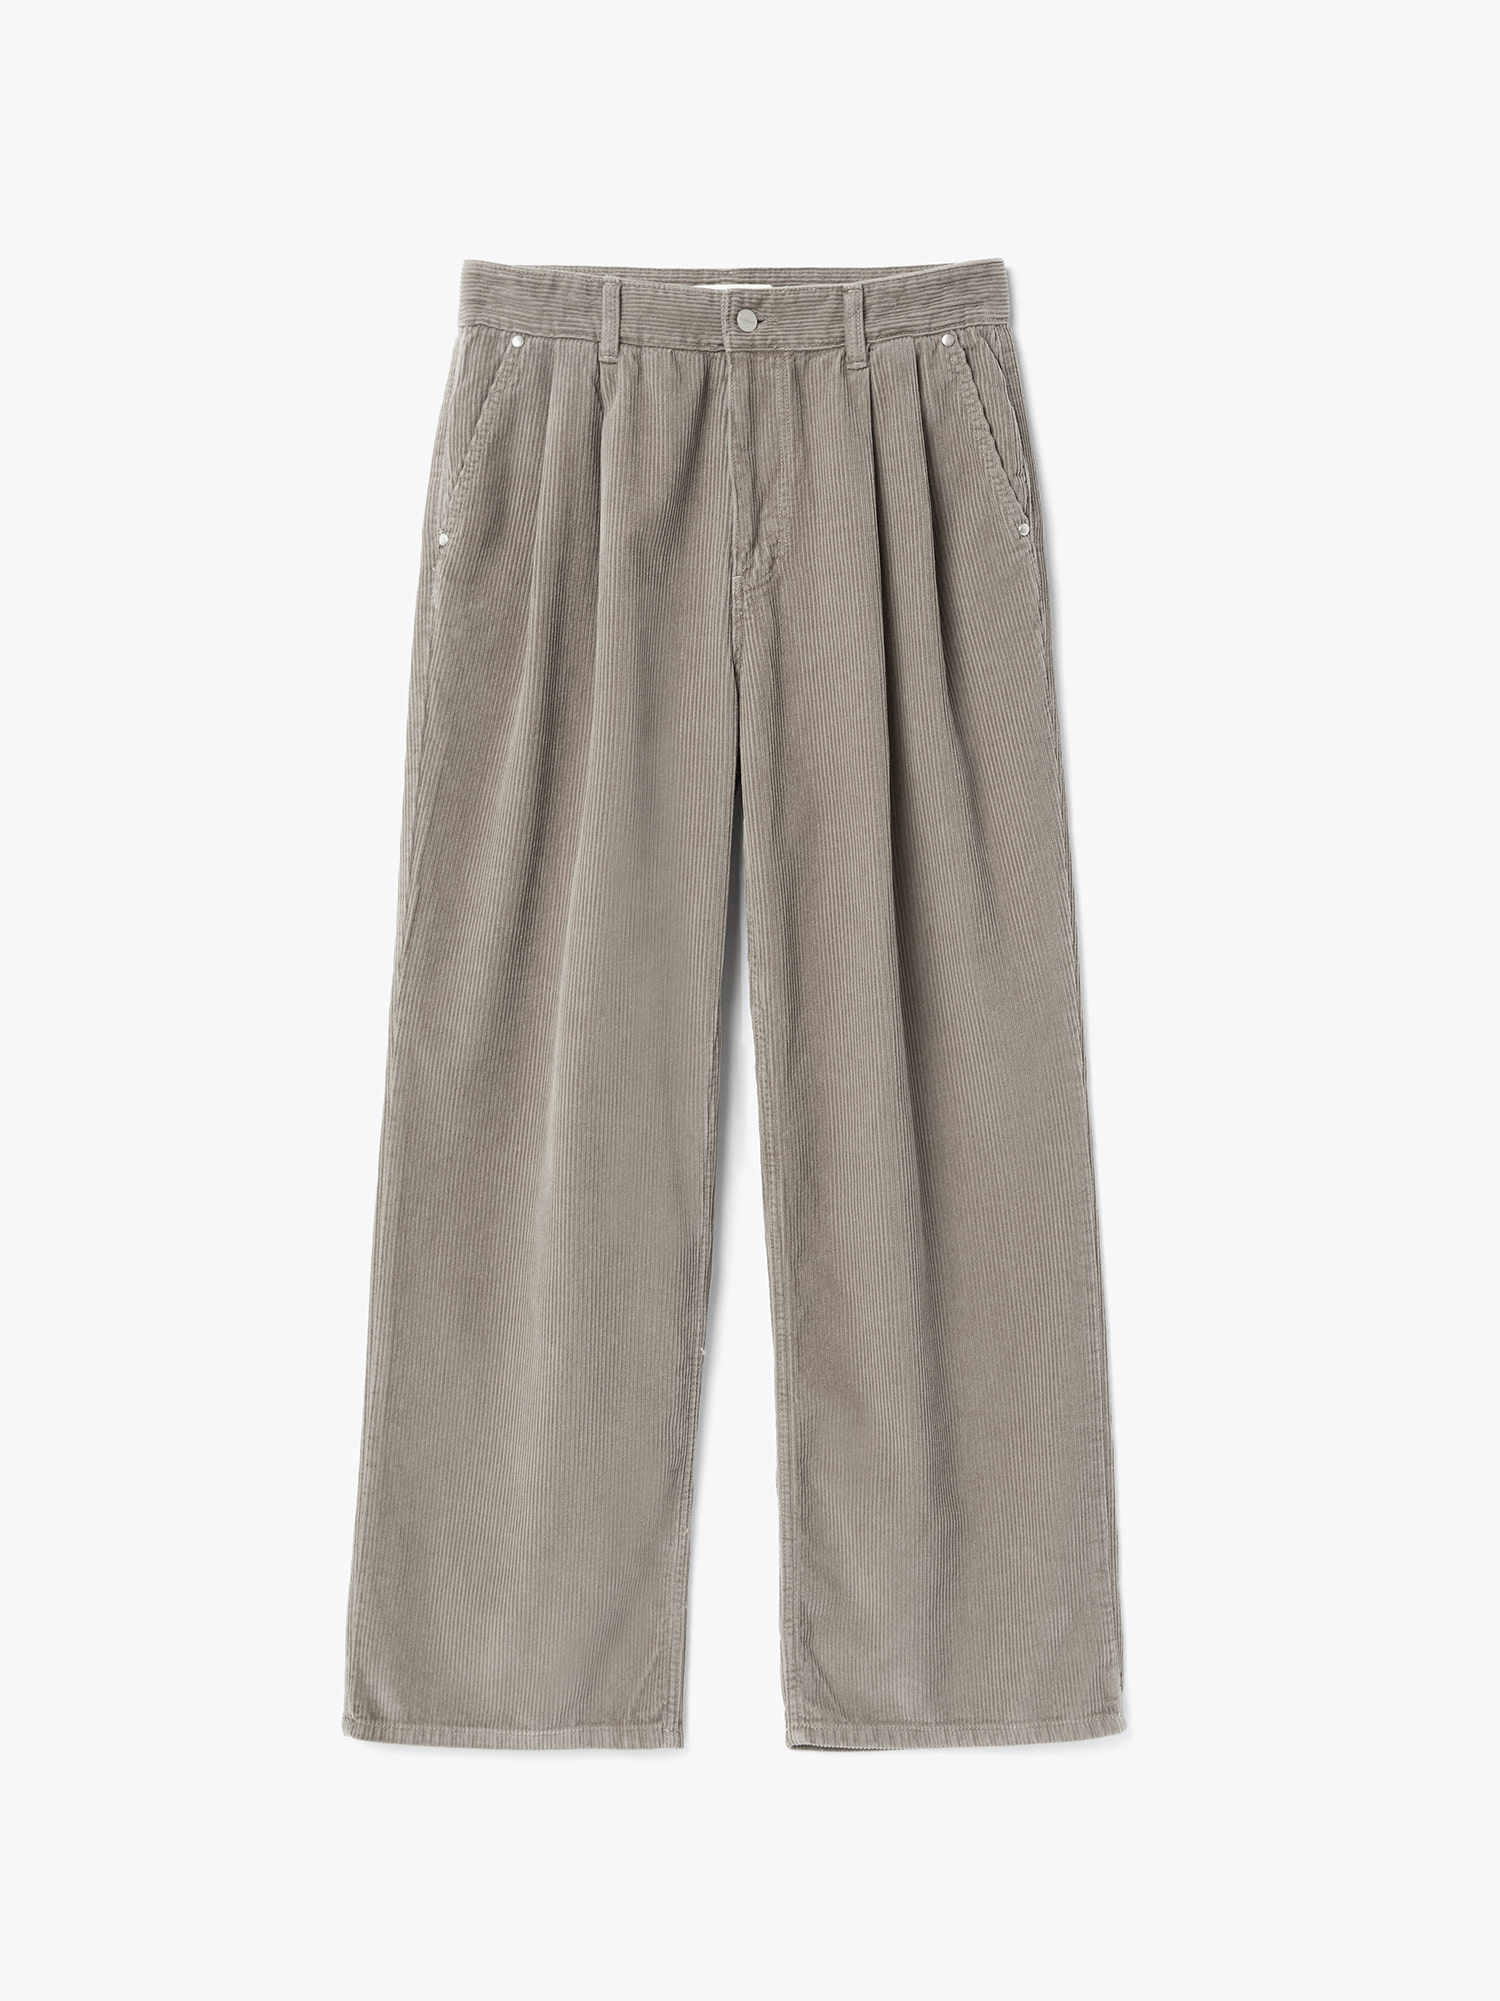 8W Corduroy Two-Tuck Pants (Olive Khaki)